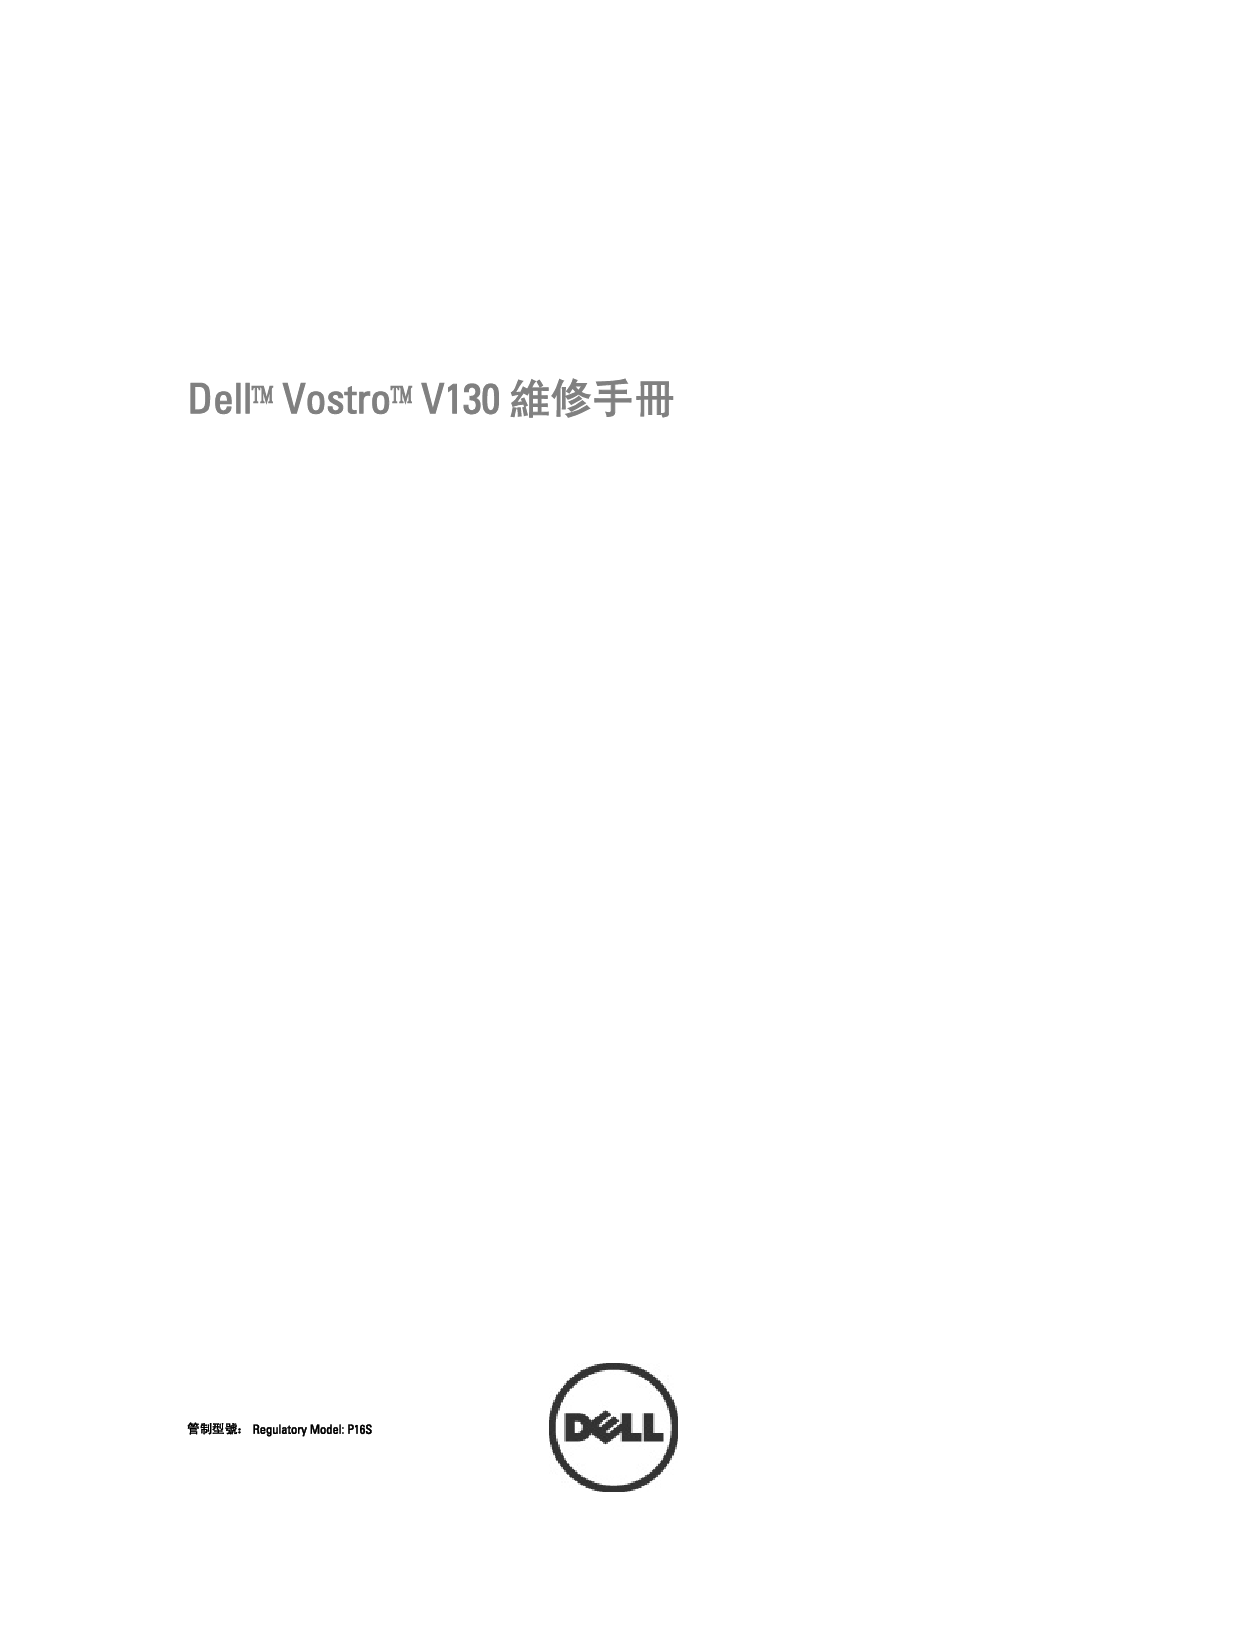 戴尔 Dell Vostro V130 繁体 维修服务手册 封面